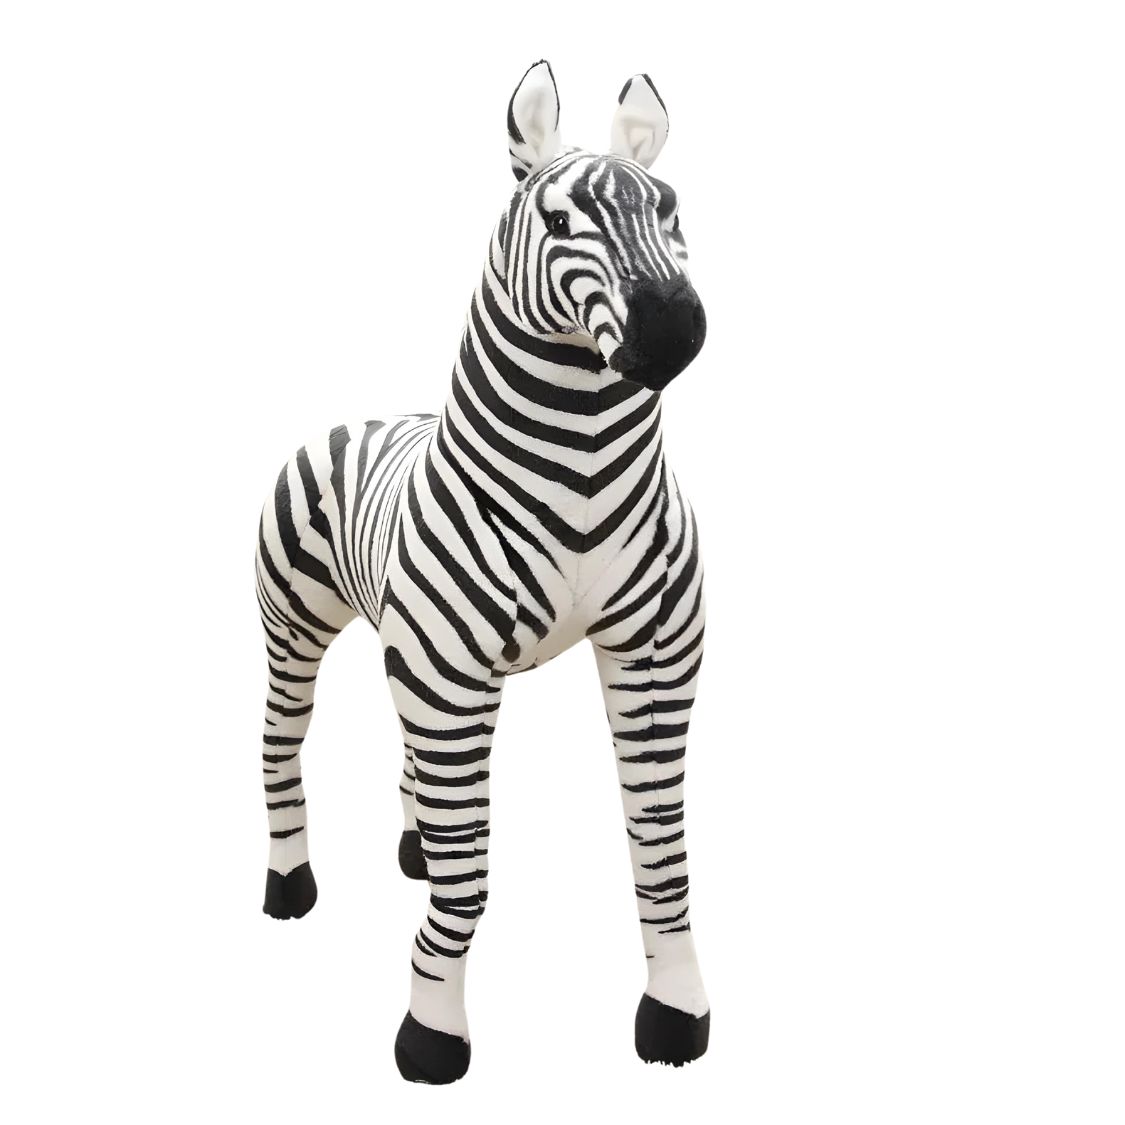 Realistic Zebra Plush Prop